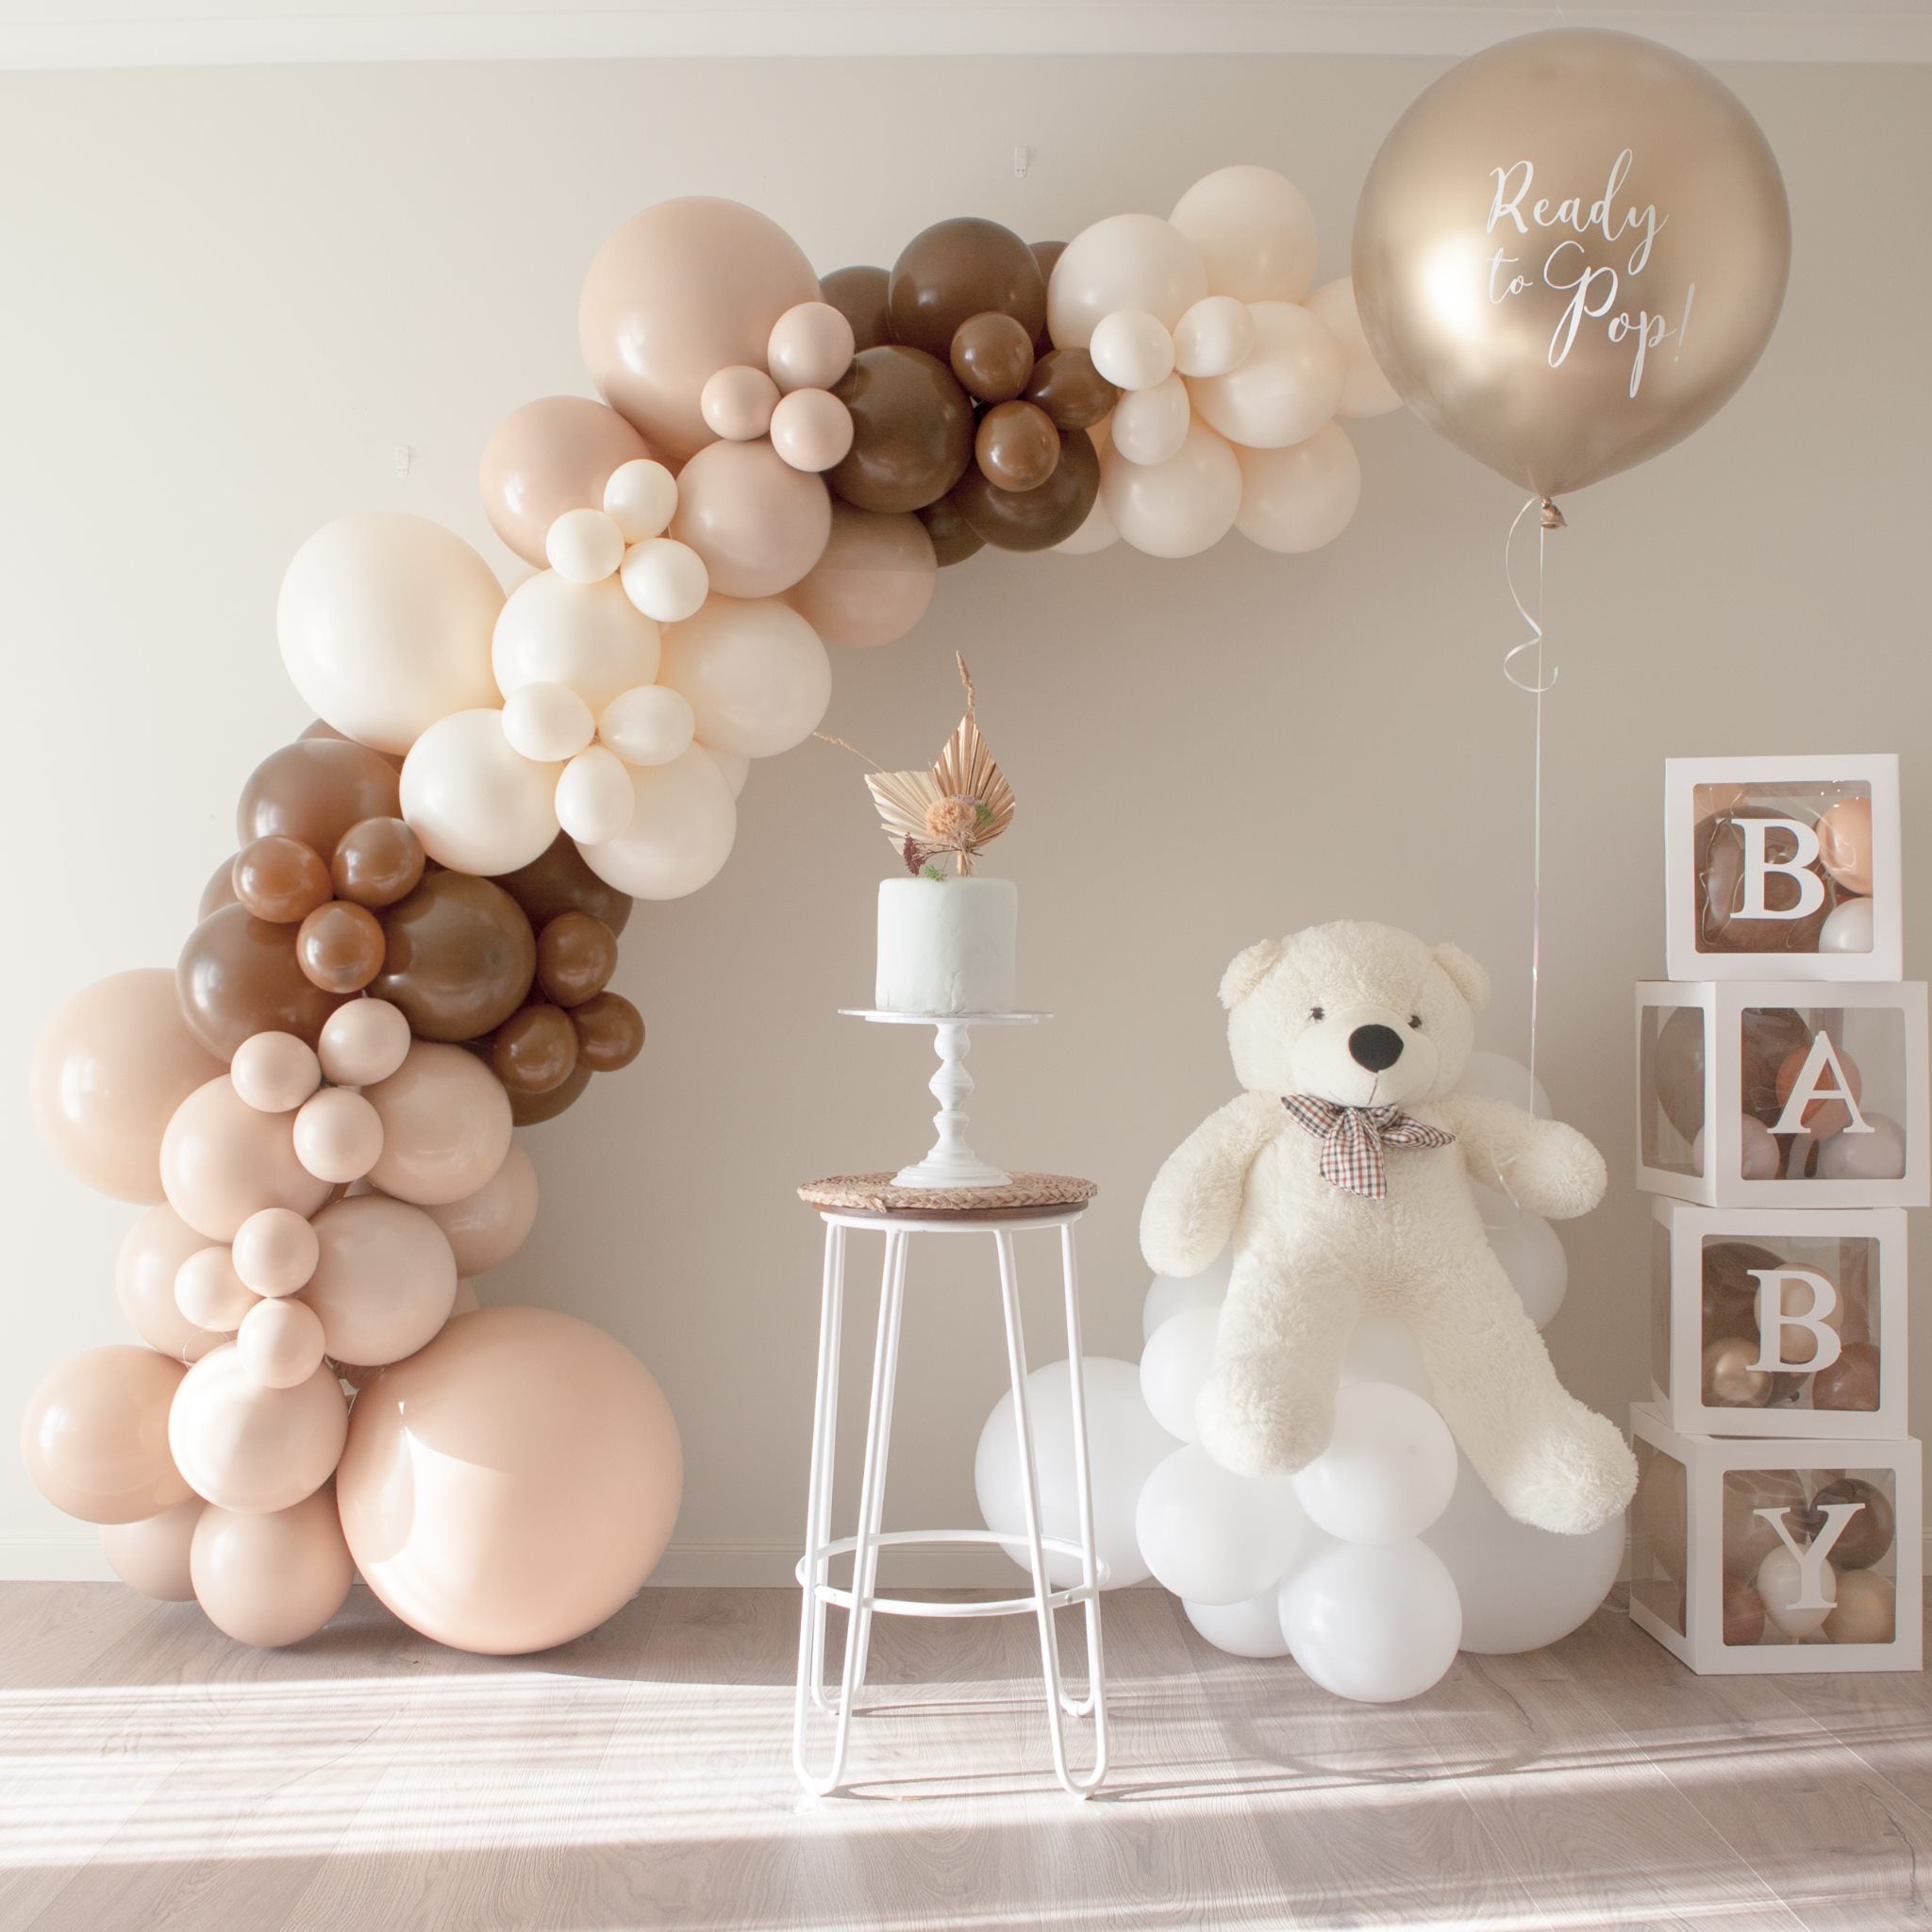 We Can't Bearly Wait Gender Reveal Balloon Garland DIY Kit - Creamy Bear